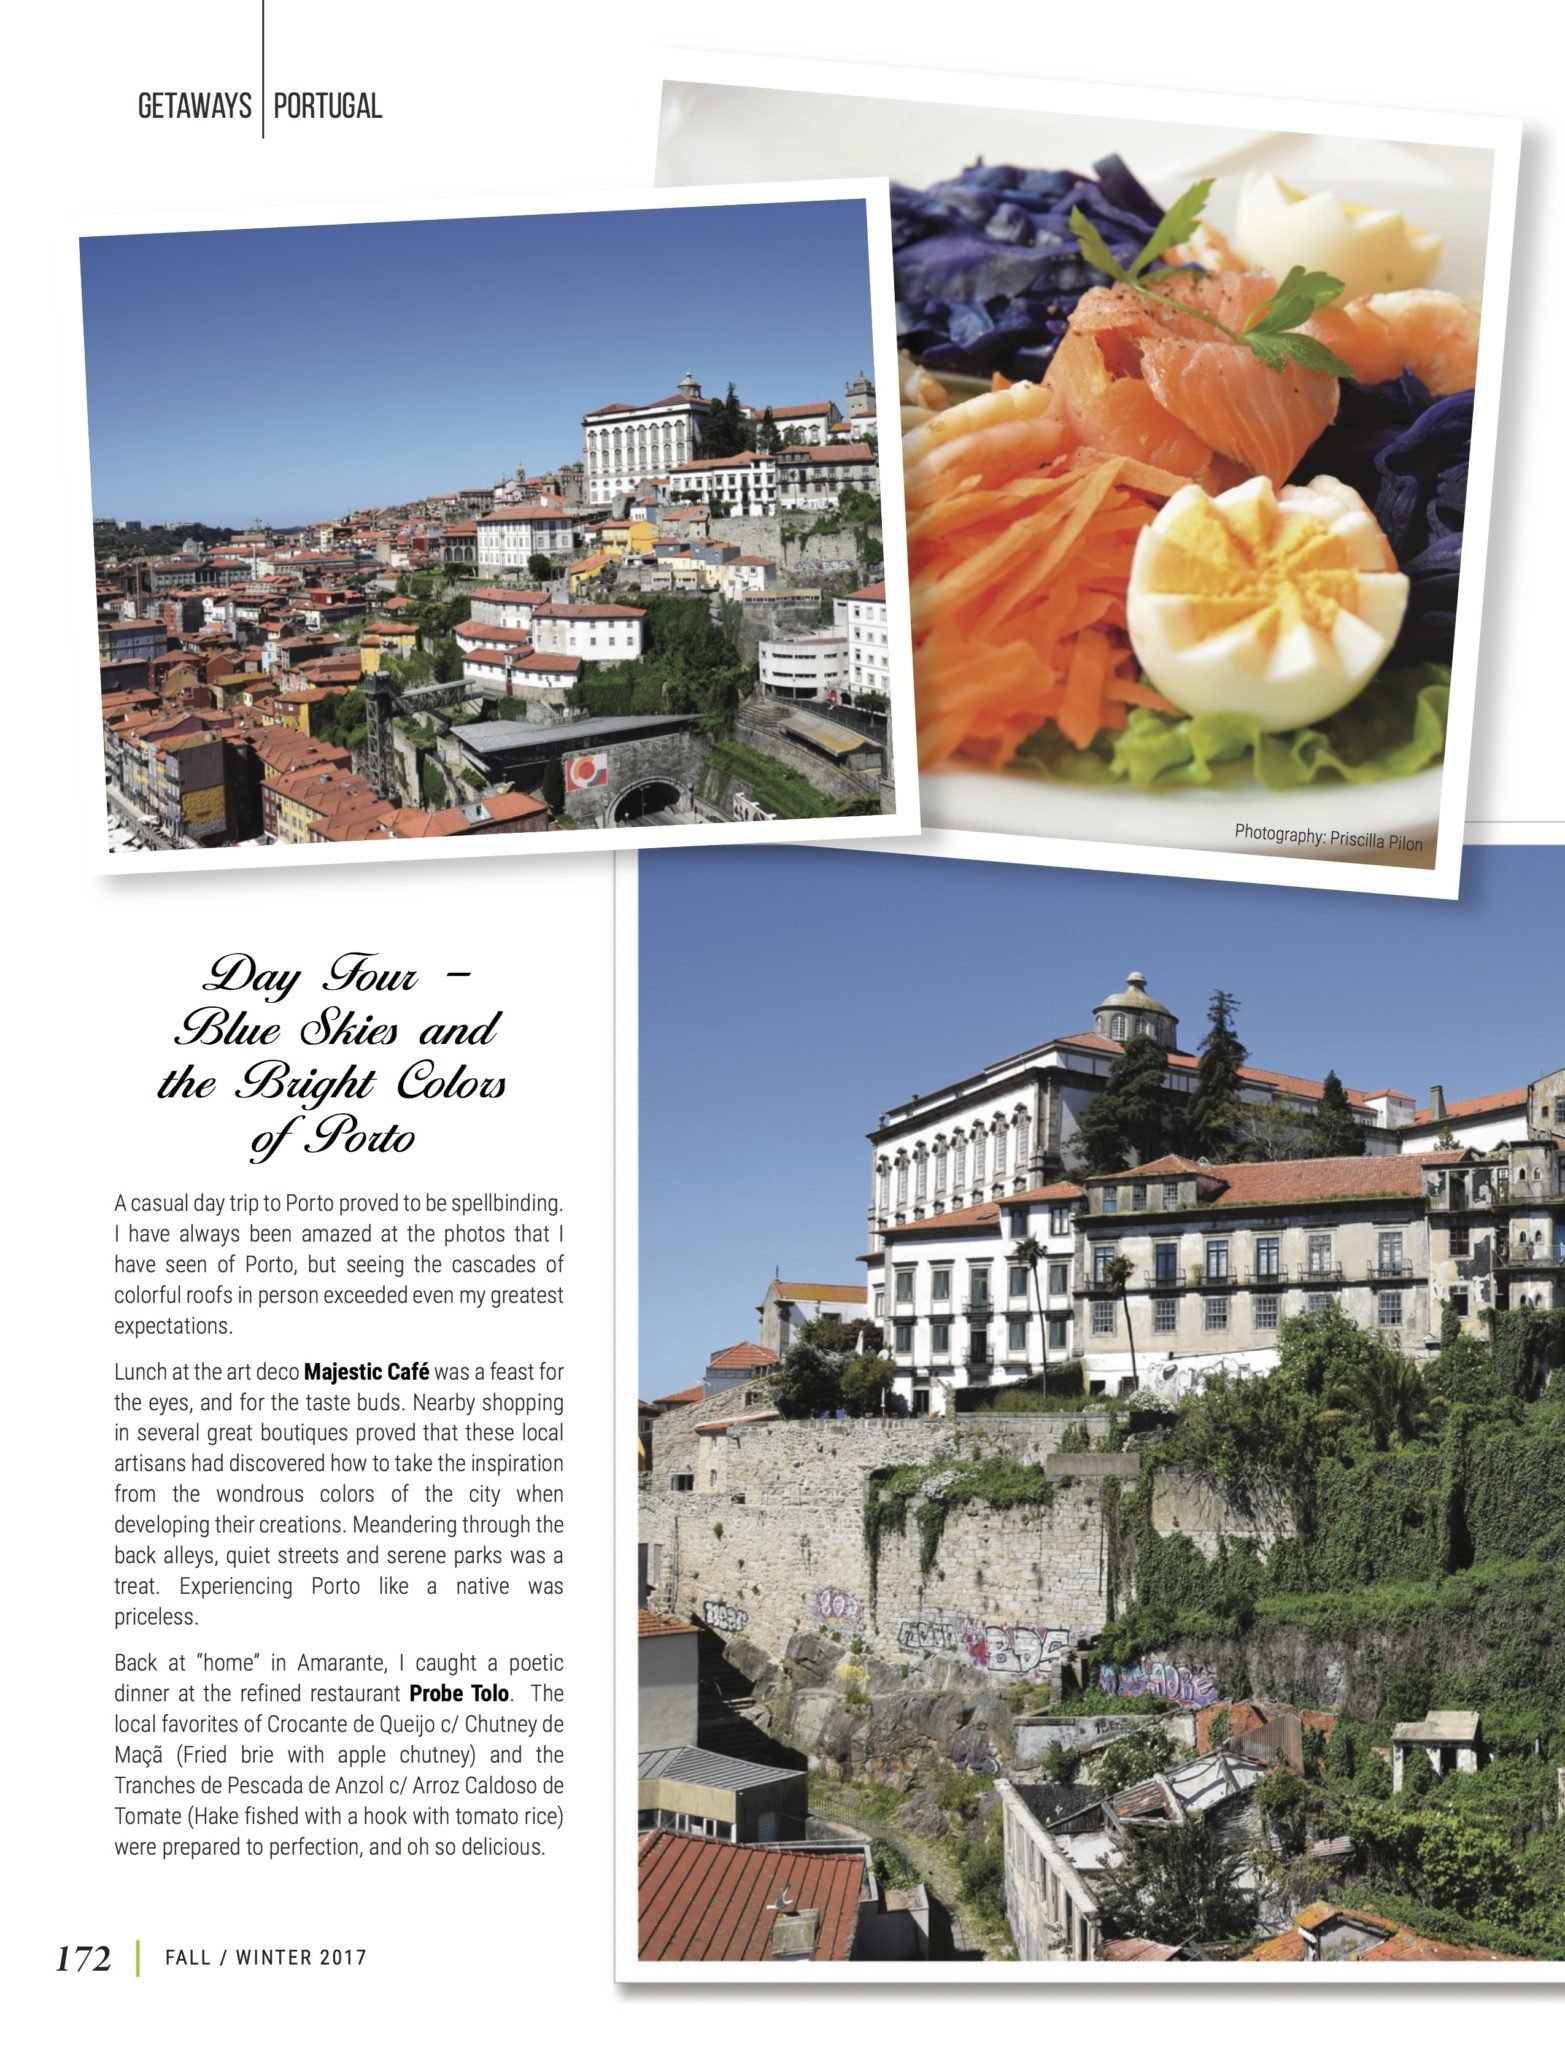 LuxeGetaways - Luxury Travel - Luxury Travel Magazine - Luxe Getaways - Luxury Lifestyle - Fall/Winter 2017 Magazine Issue - Digital Magazine - Travel Magazine - Portugal - Priscilla Pilon